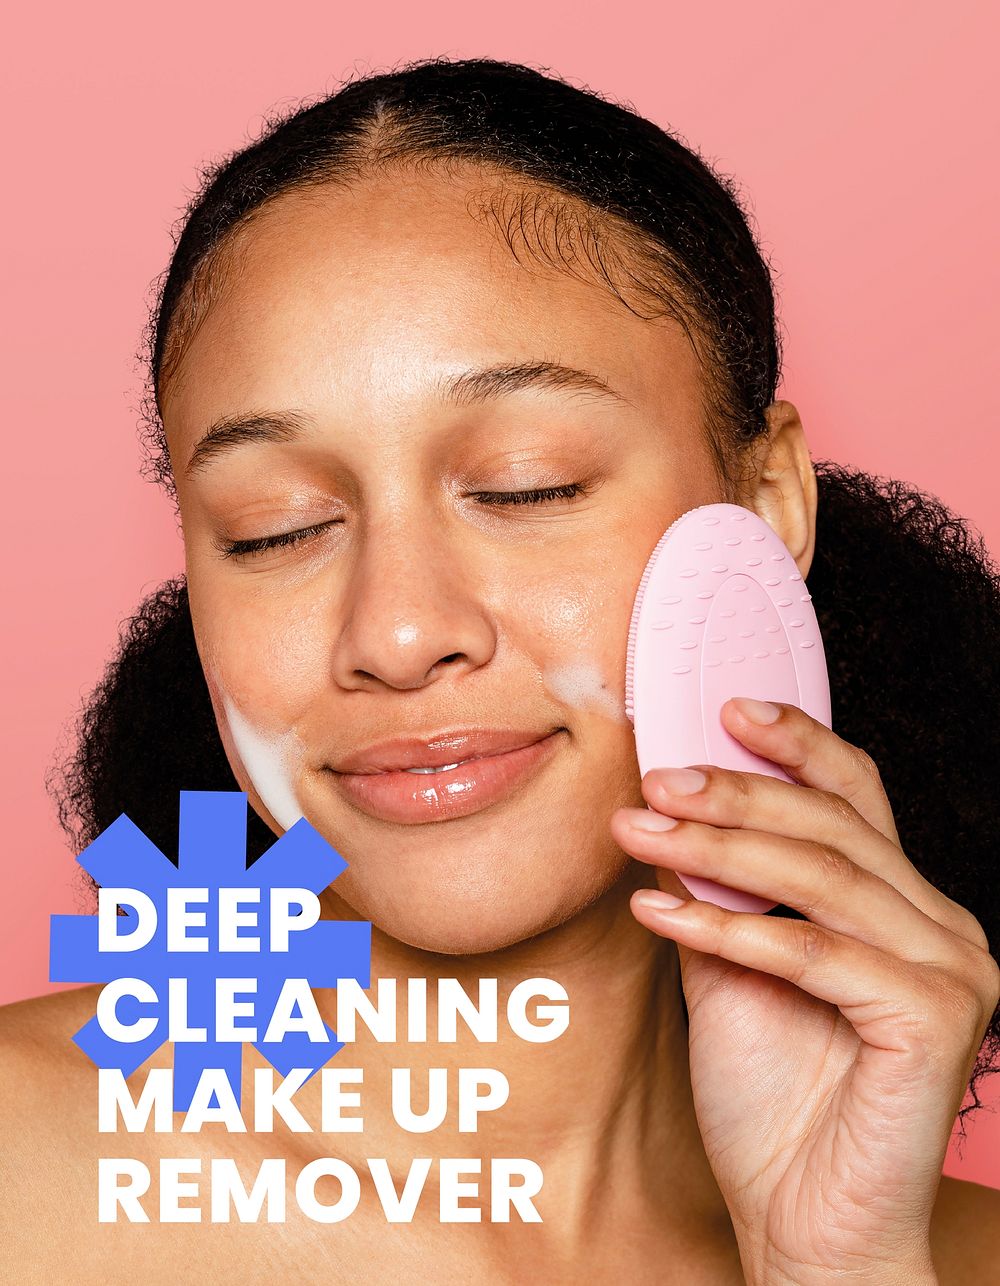 Deep cleansing flyer editable template, beauty ad vector